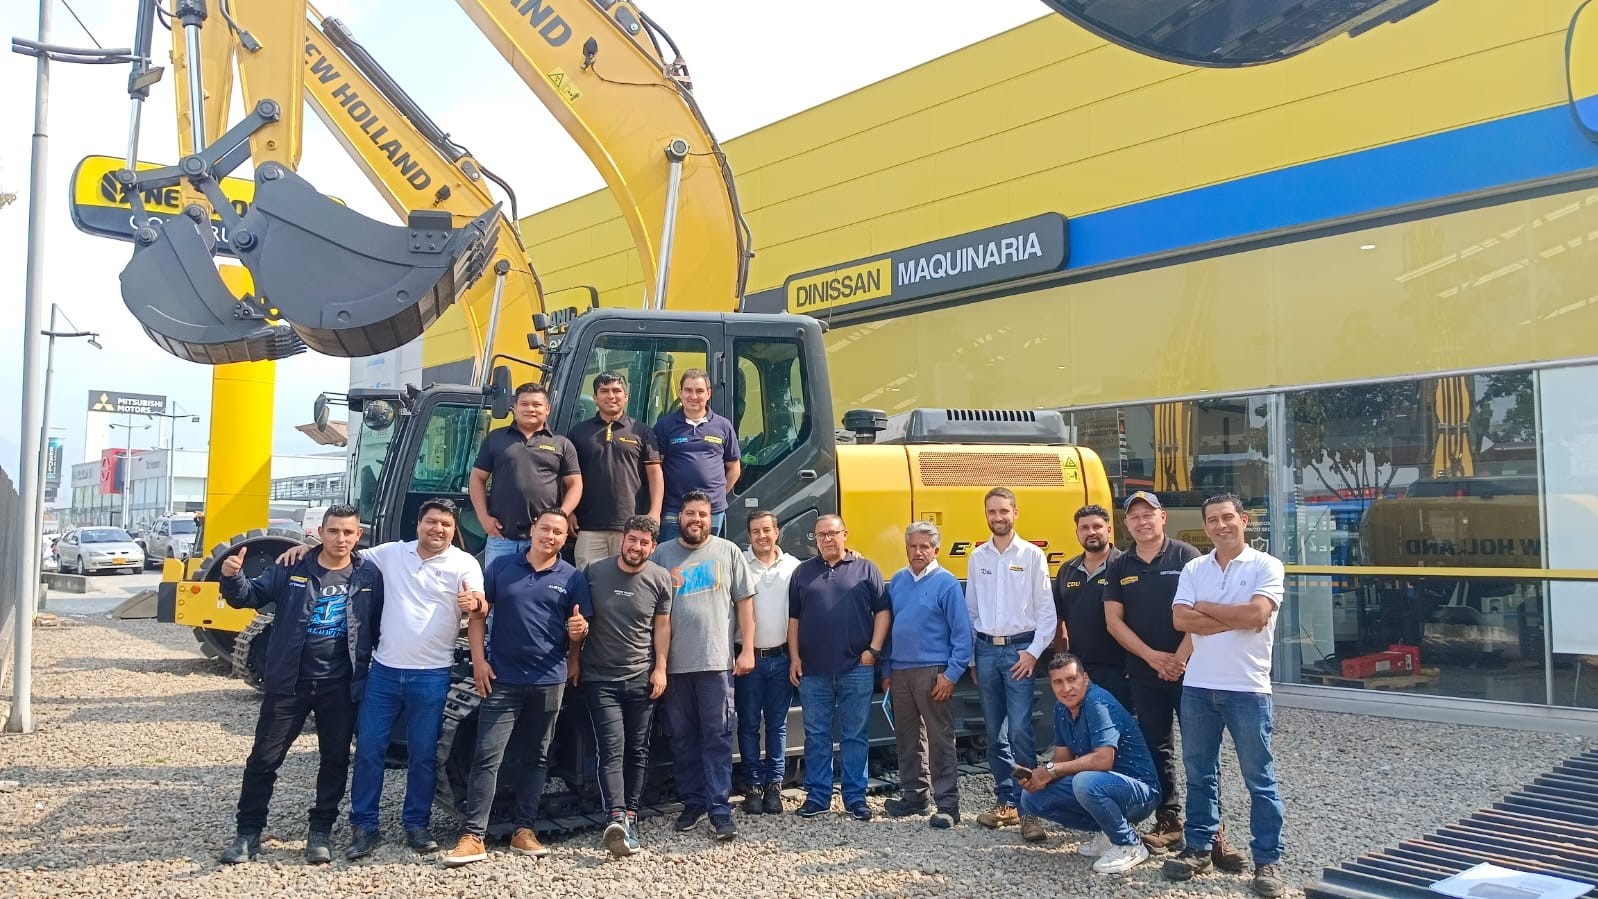 New Holland Construction avanza con firmeza en Colombia